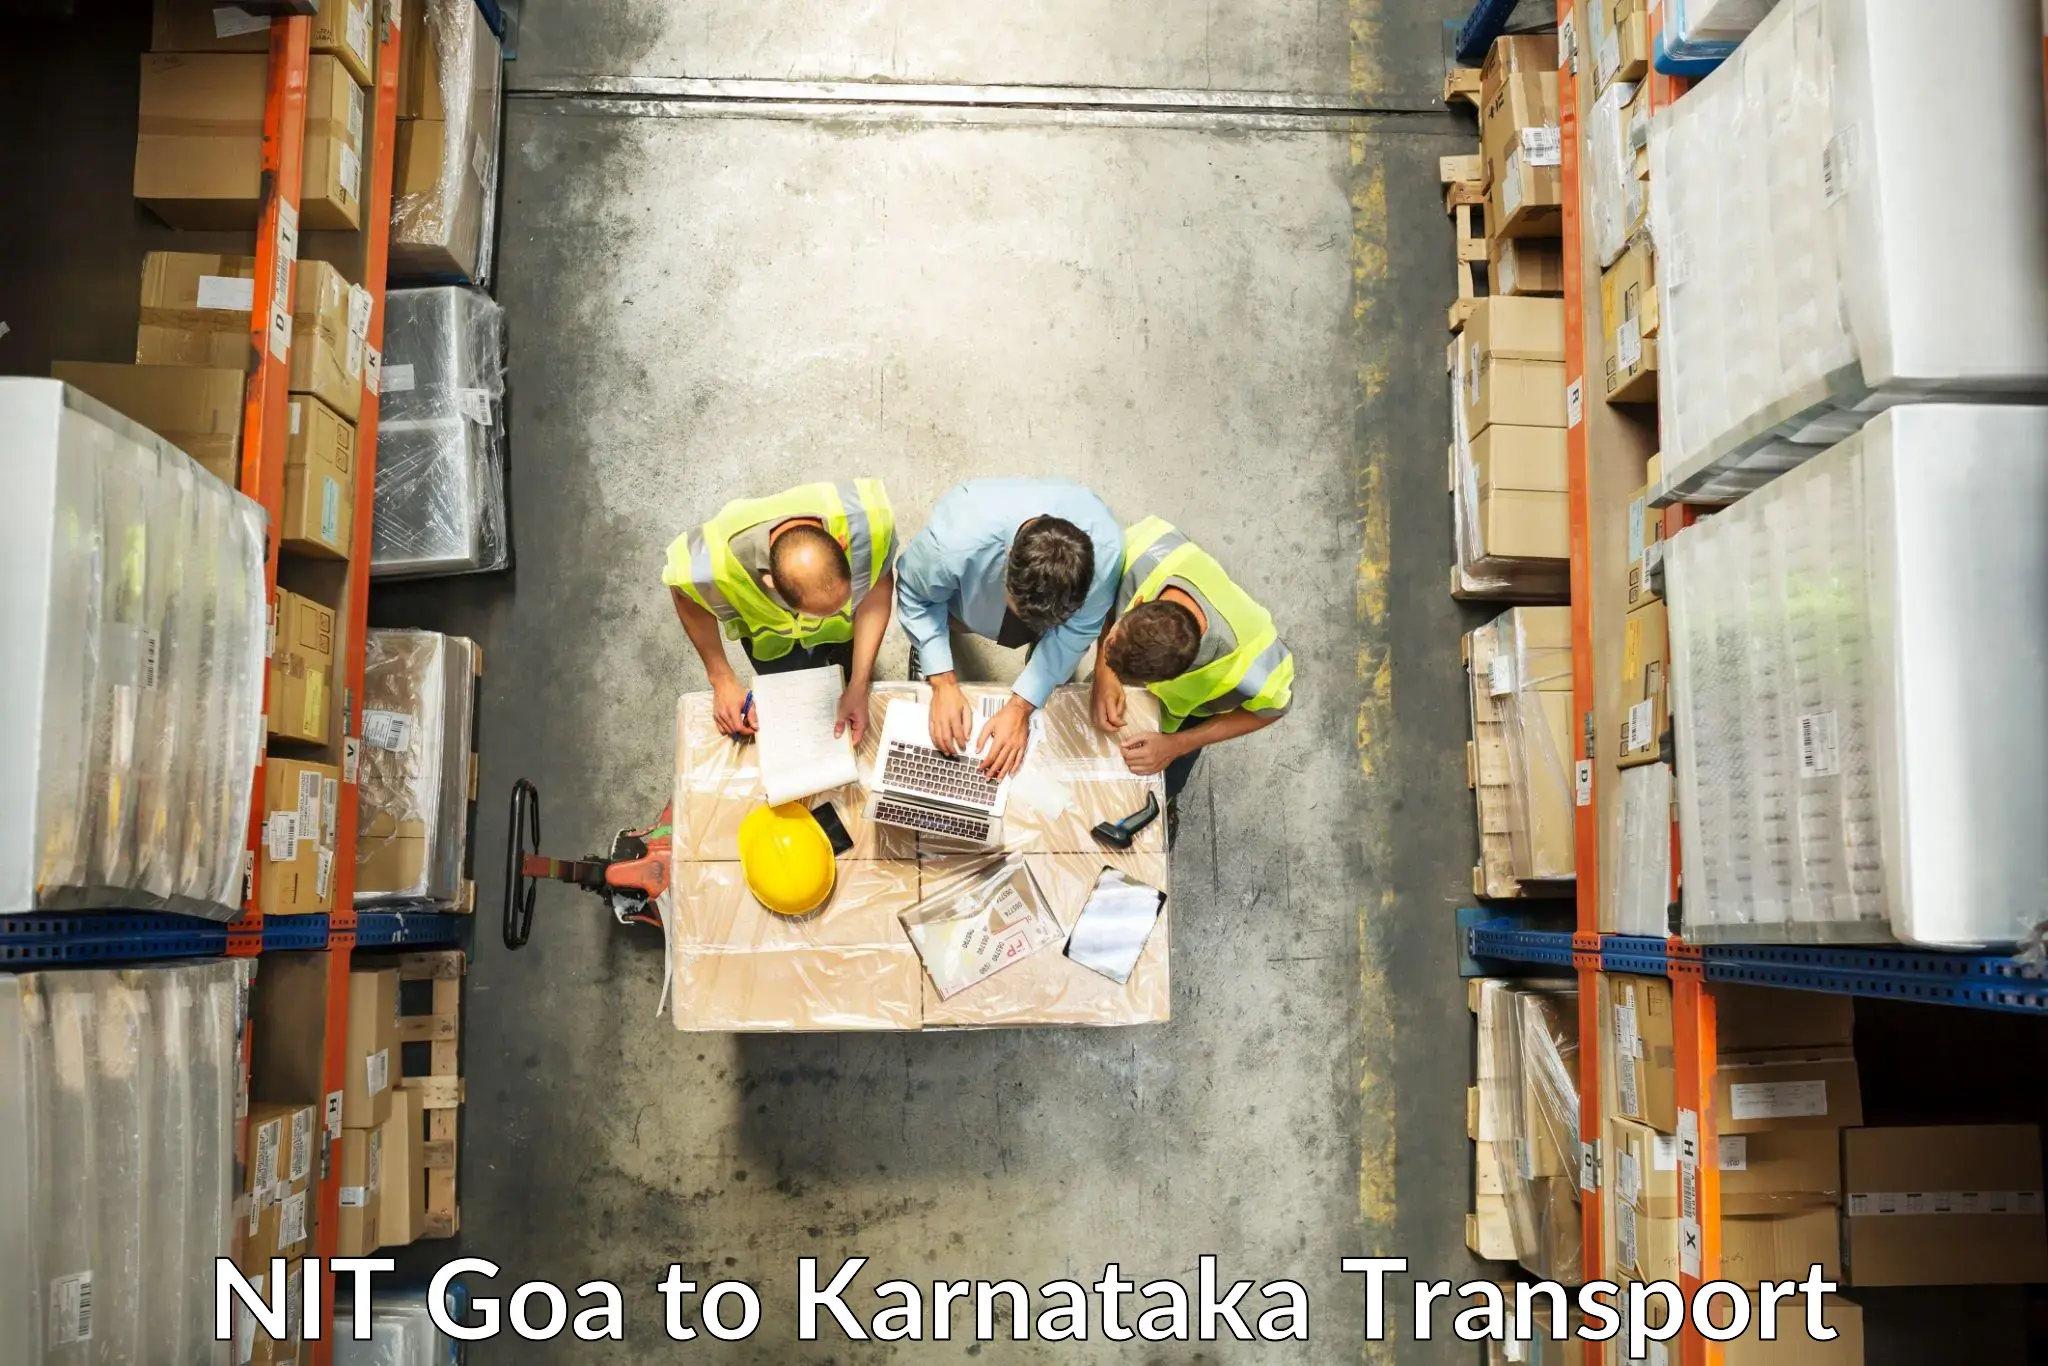 Container transport service NIT Goa to Karnataka